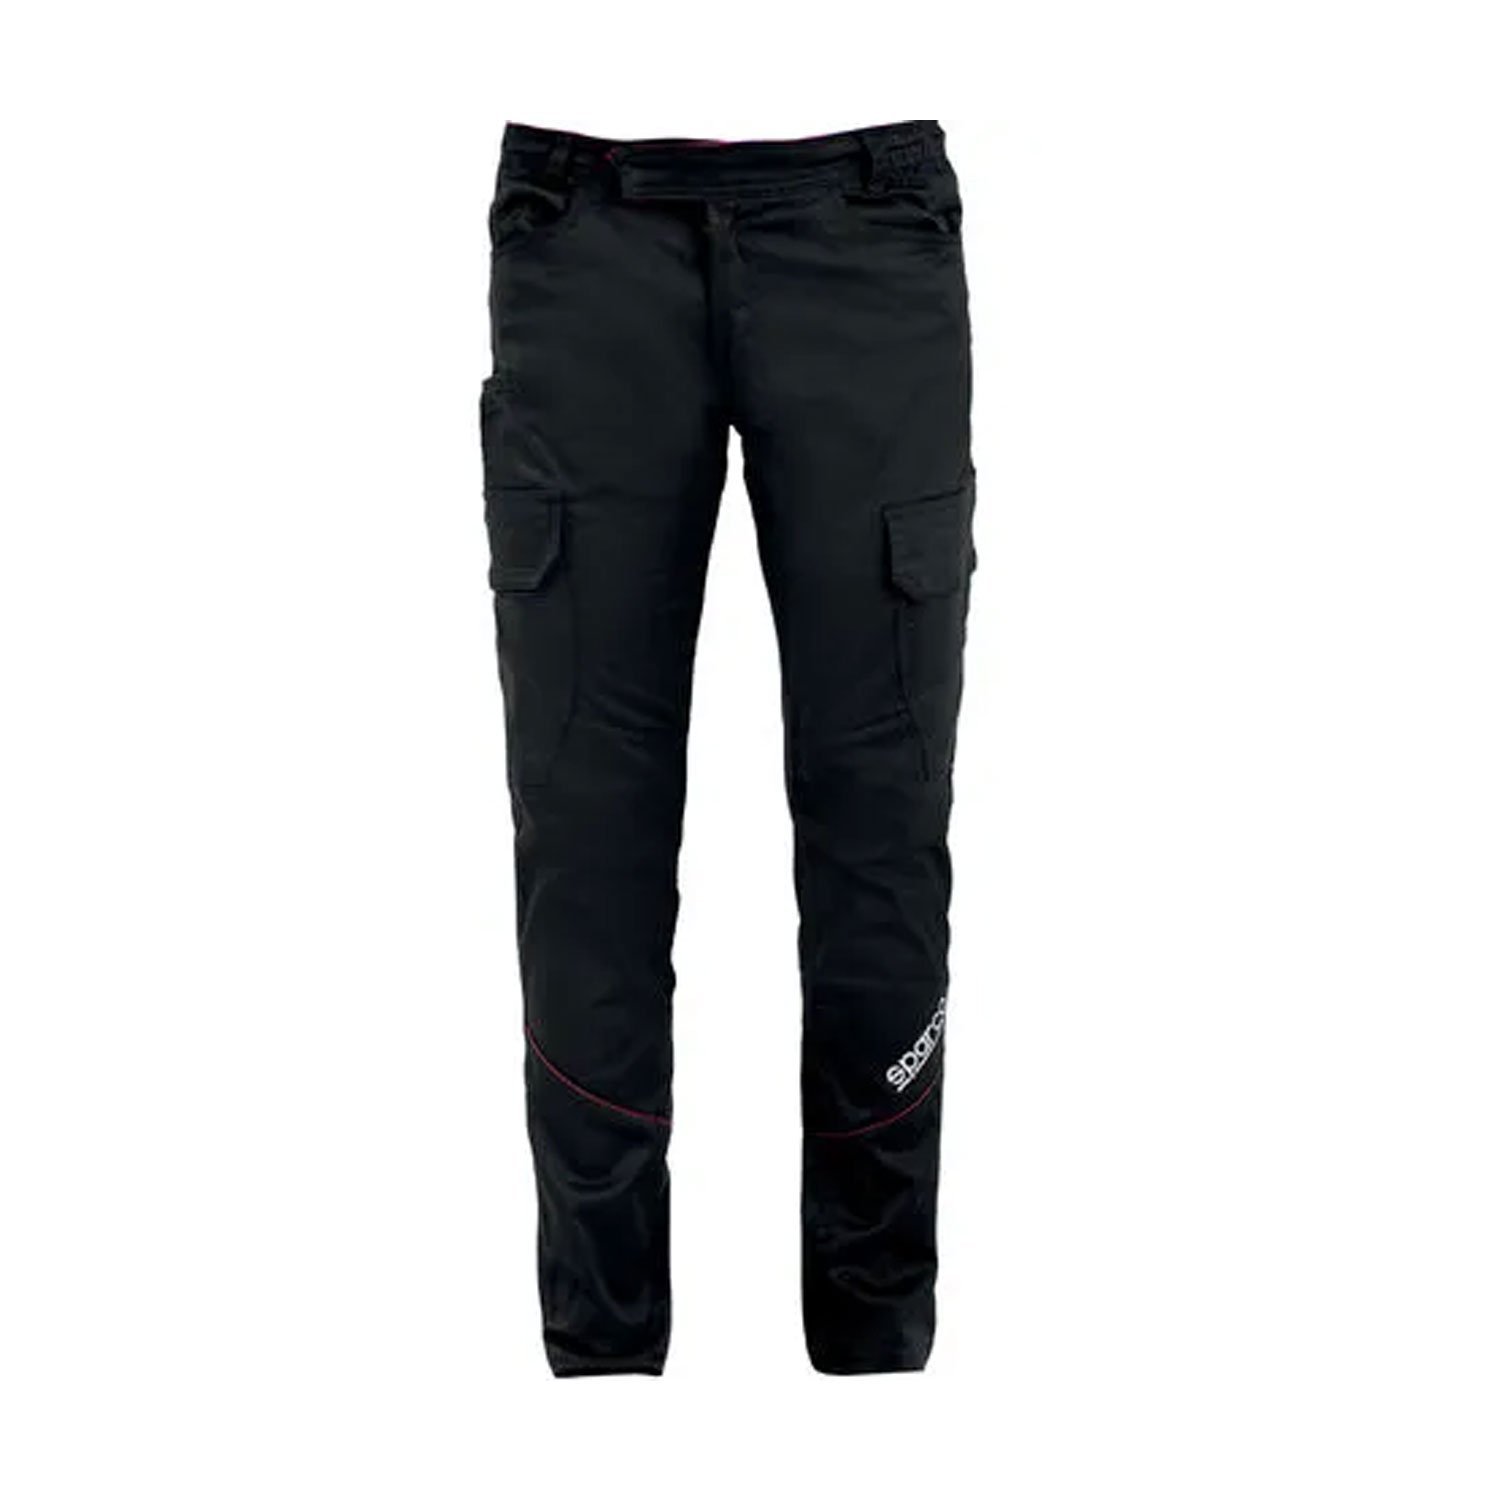 Sparco Boston pants for mechanics black Black | Clothing \ Trousers ...